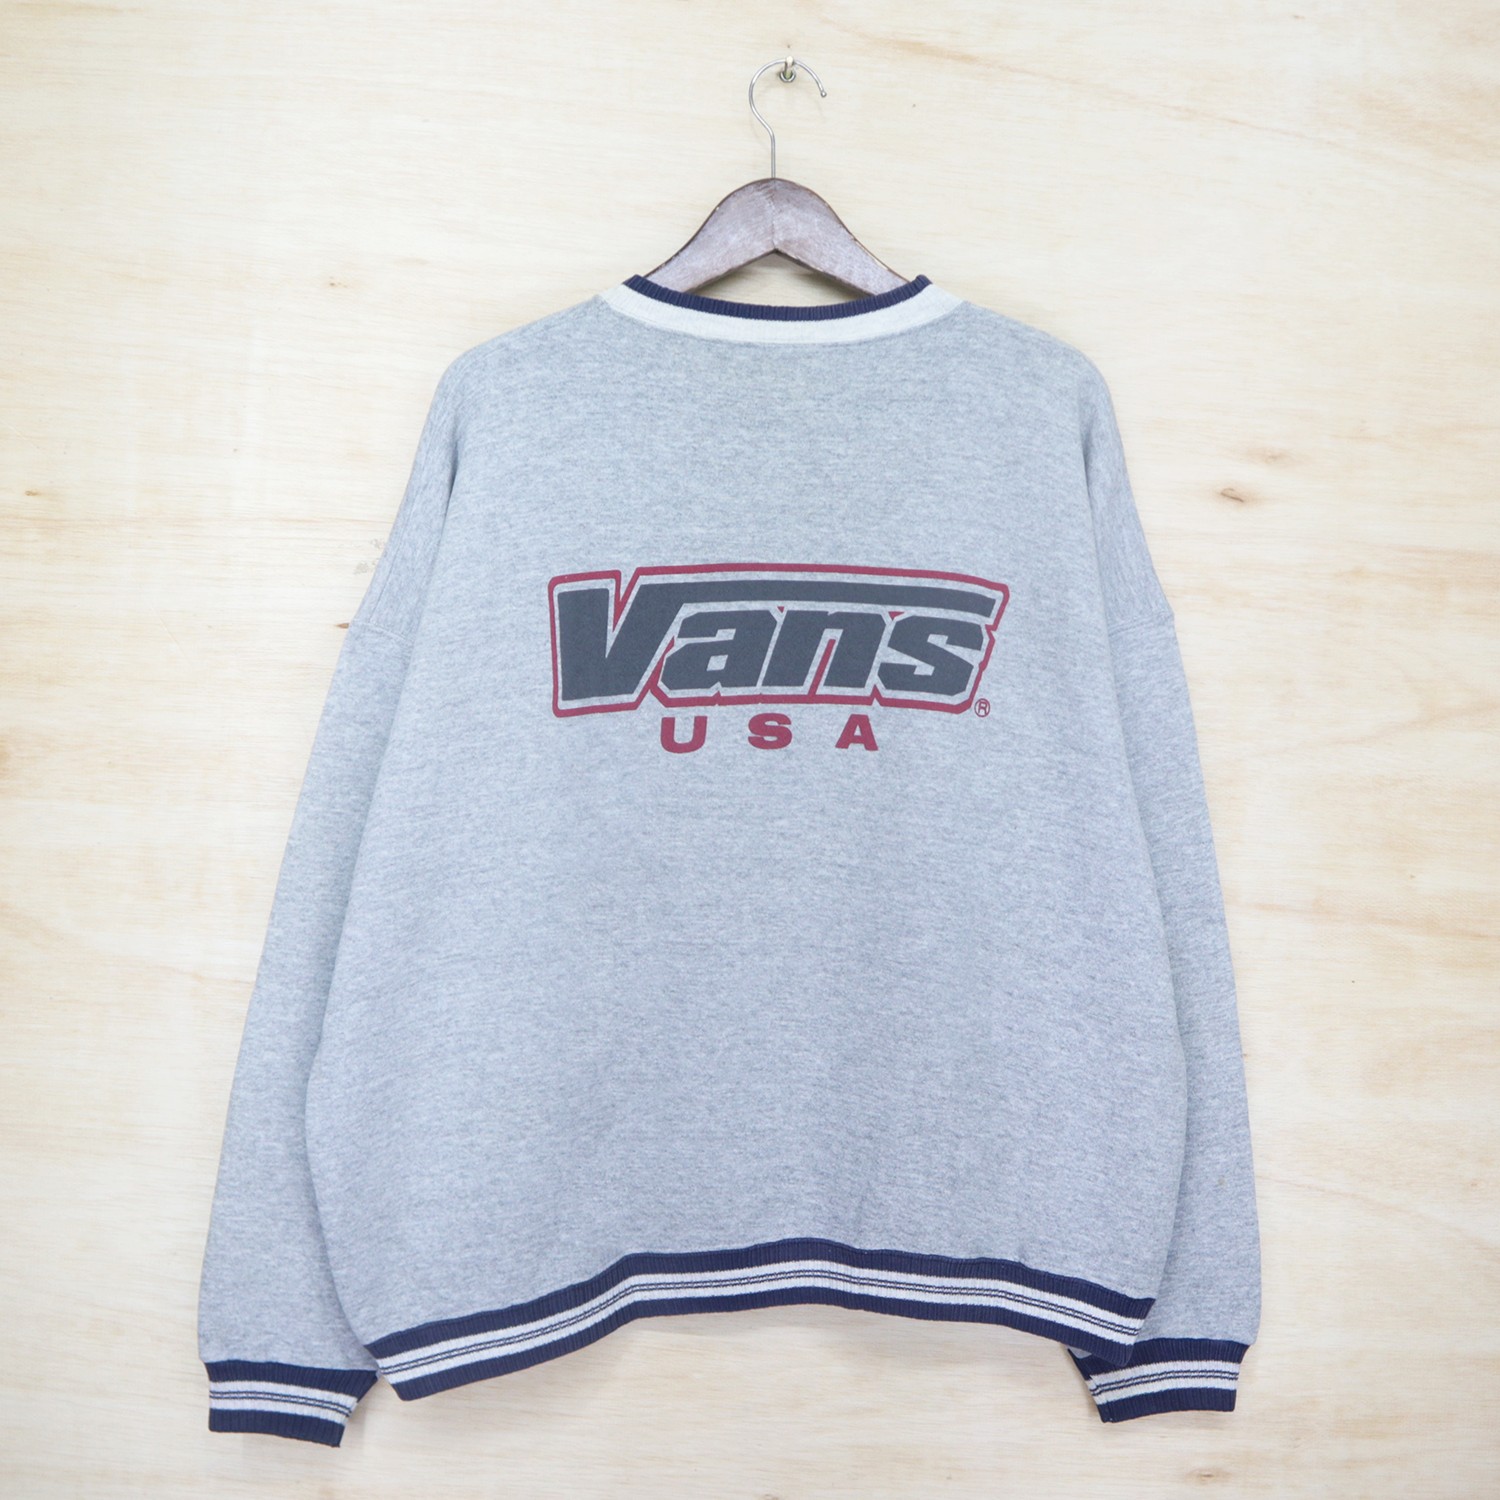 Vintage 90s VANS USA Skateboard Big Logo Sweater Sweatshirt Pullover Jumper - 1